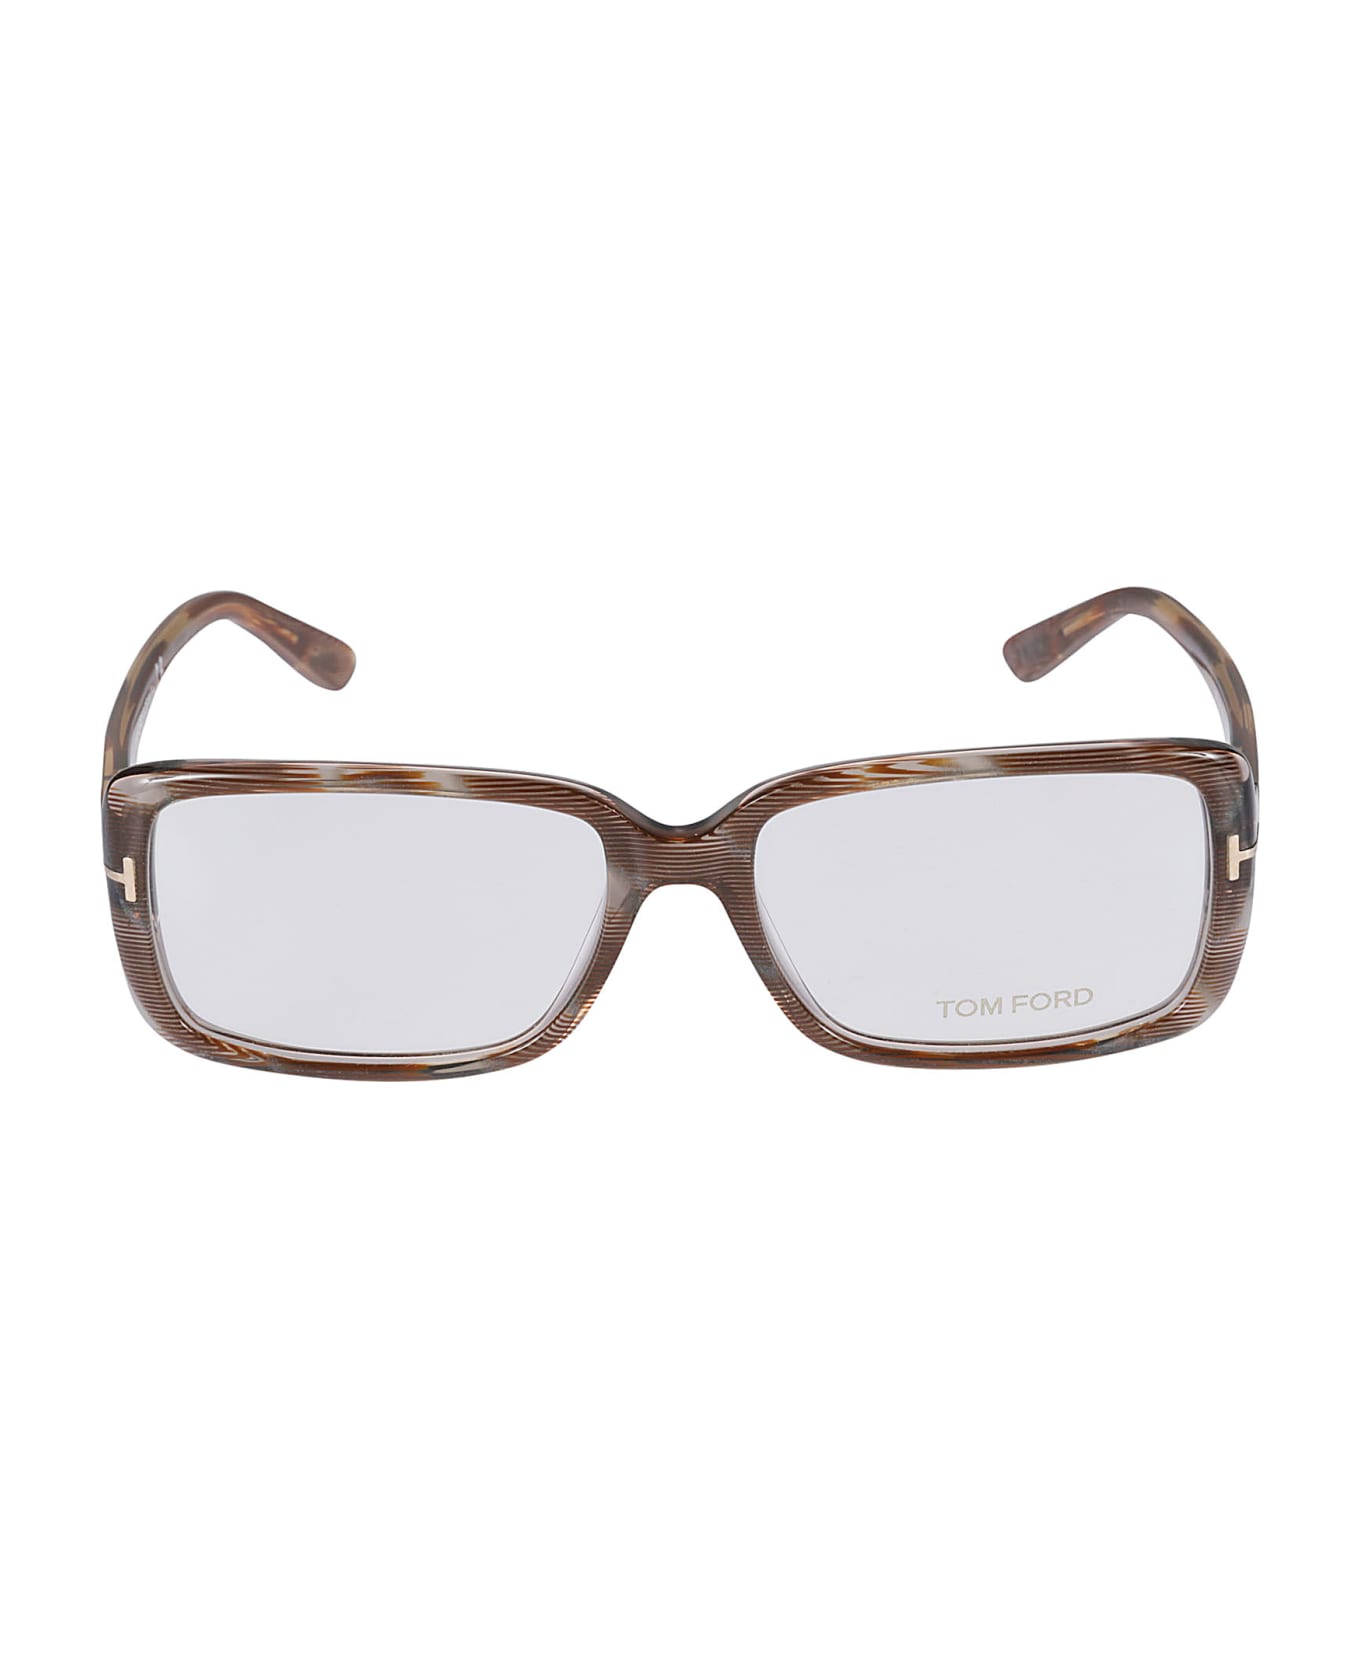 Tom Ford Eyewear Stripe Effect Frame Glasses - 059